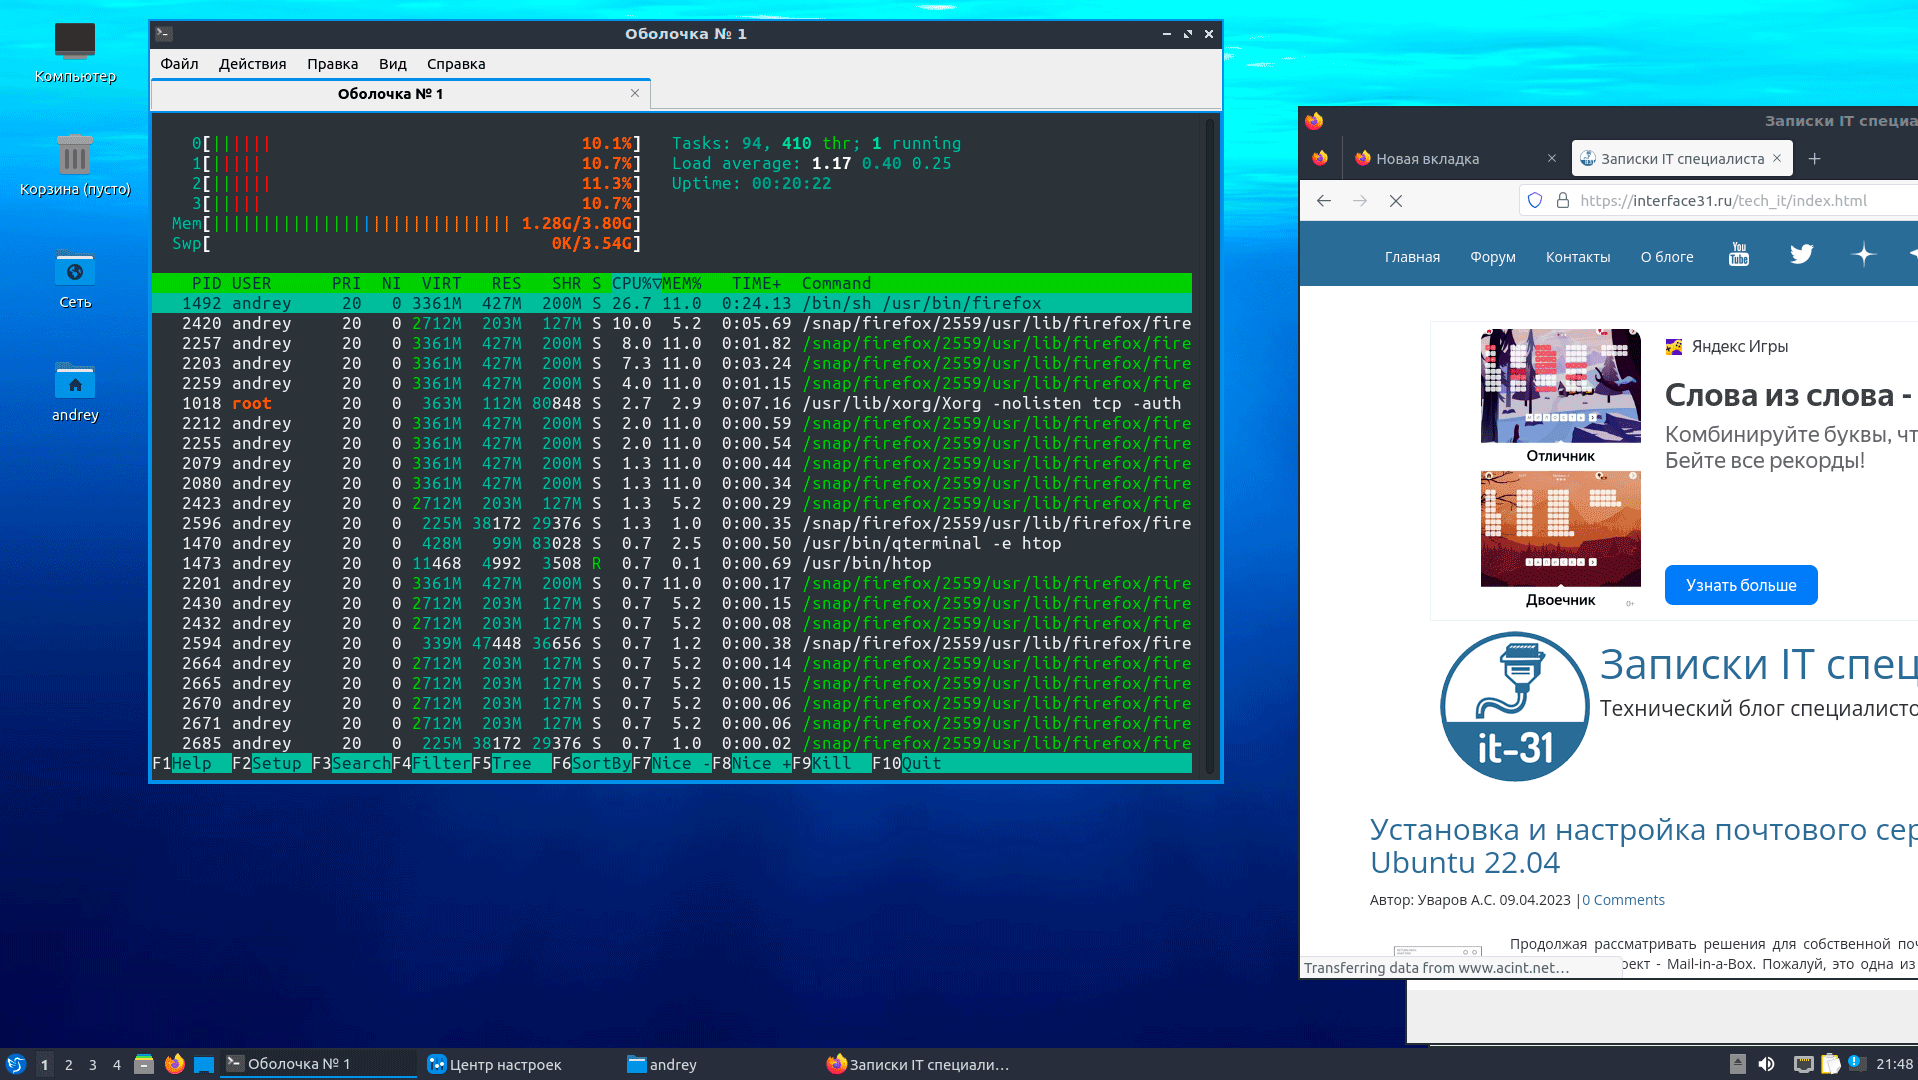 https://interface31.ru/tech_it/images/Linux-desktop-environment-overview-024.png